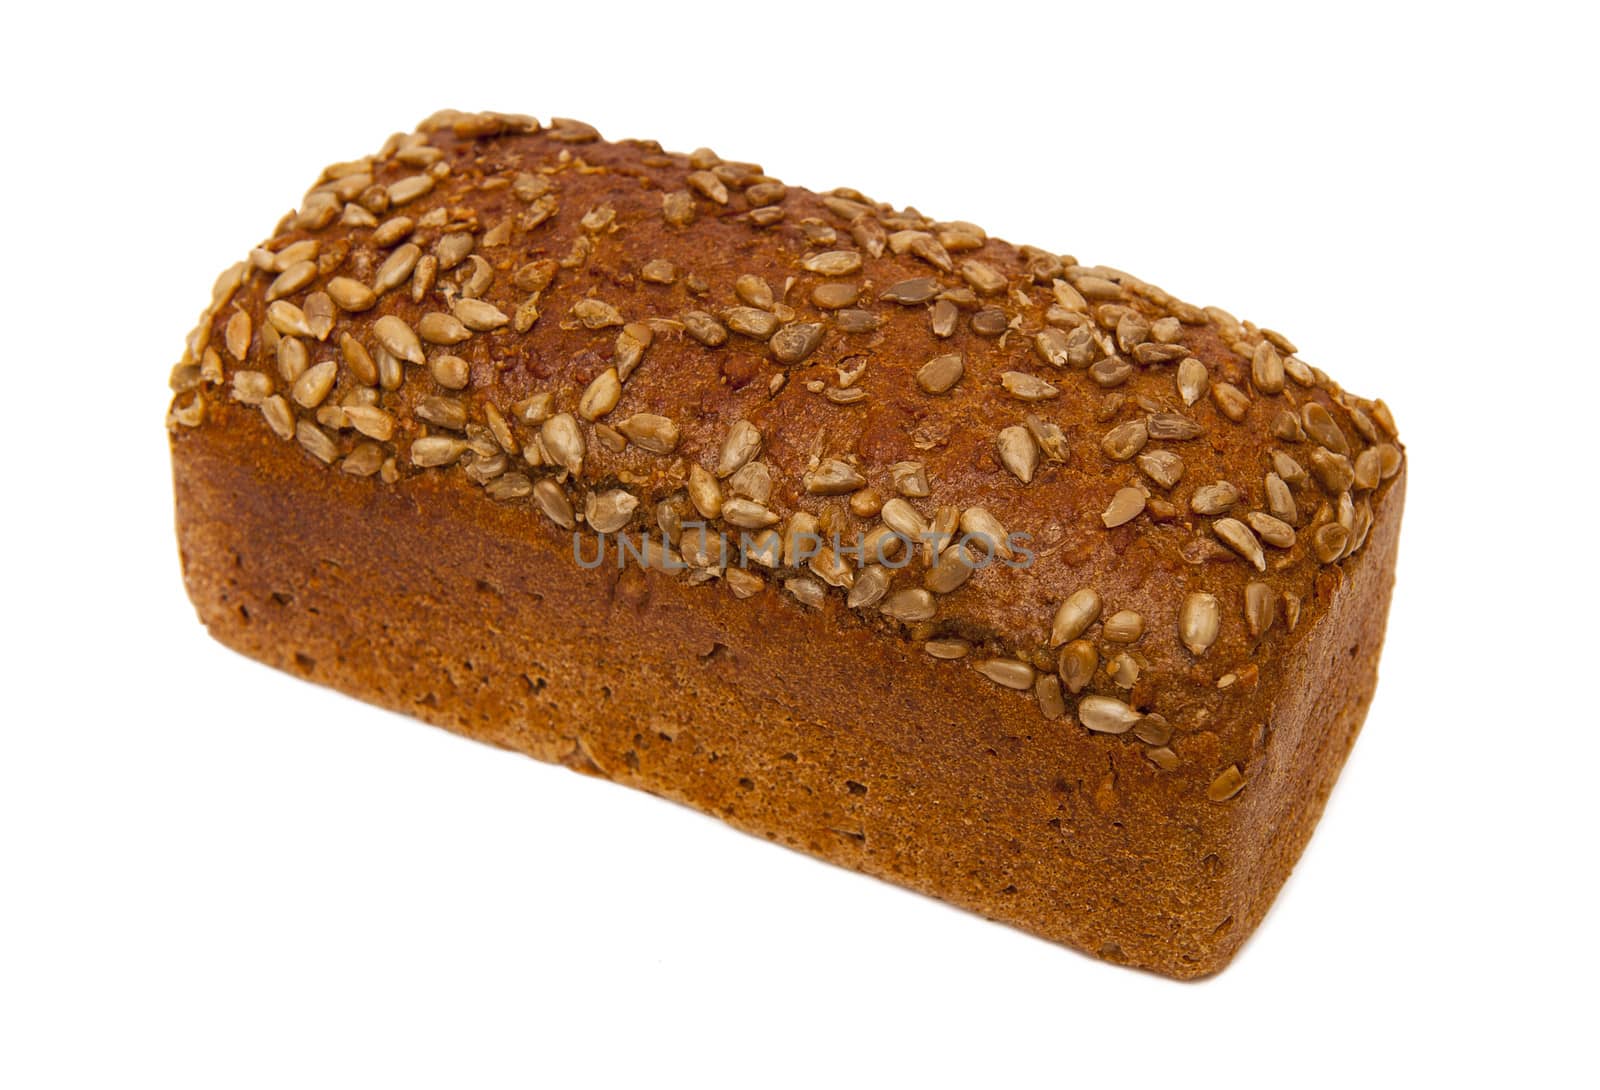 Bread by Yaurinko